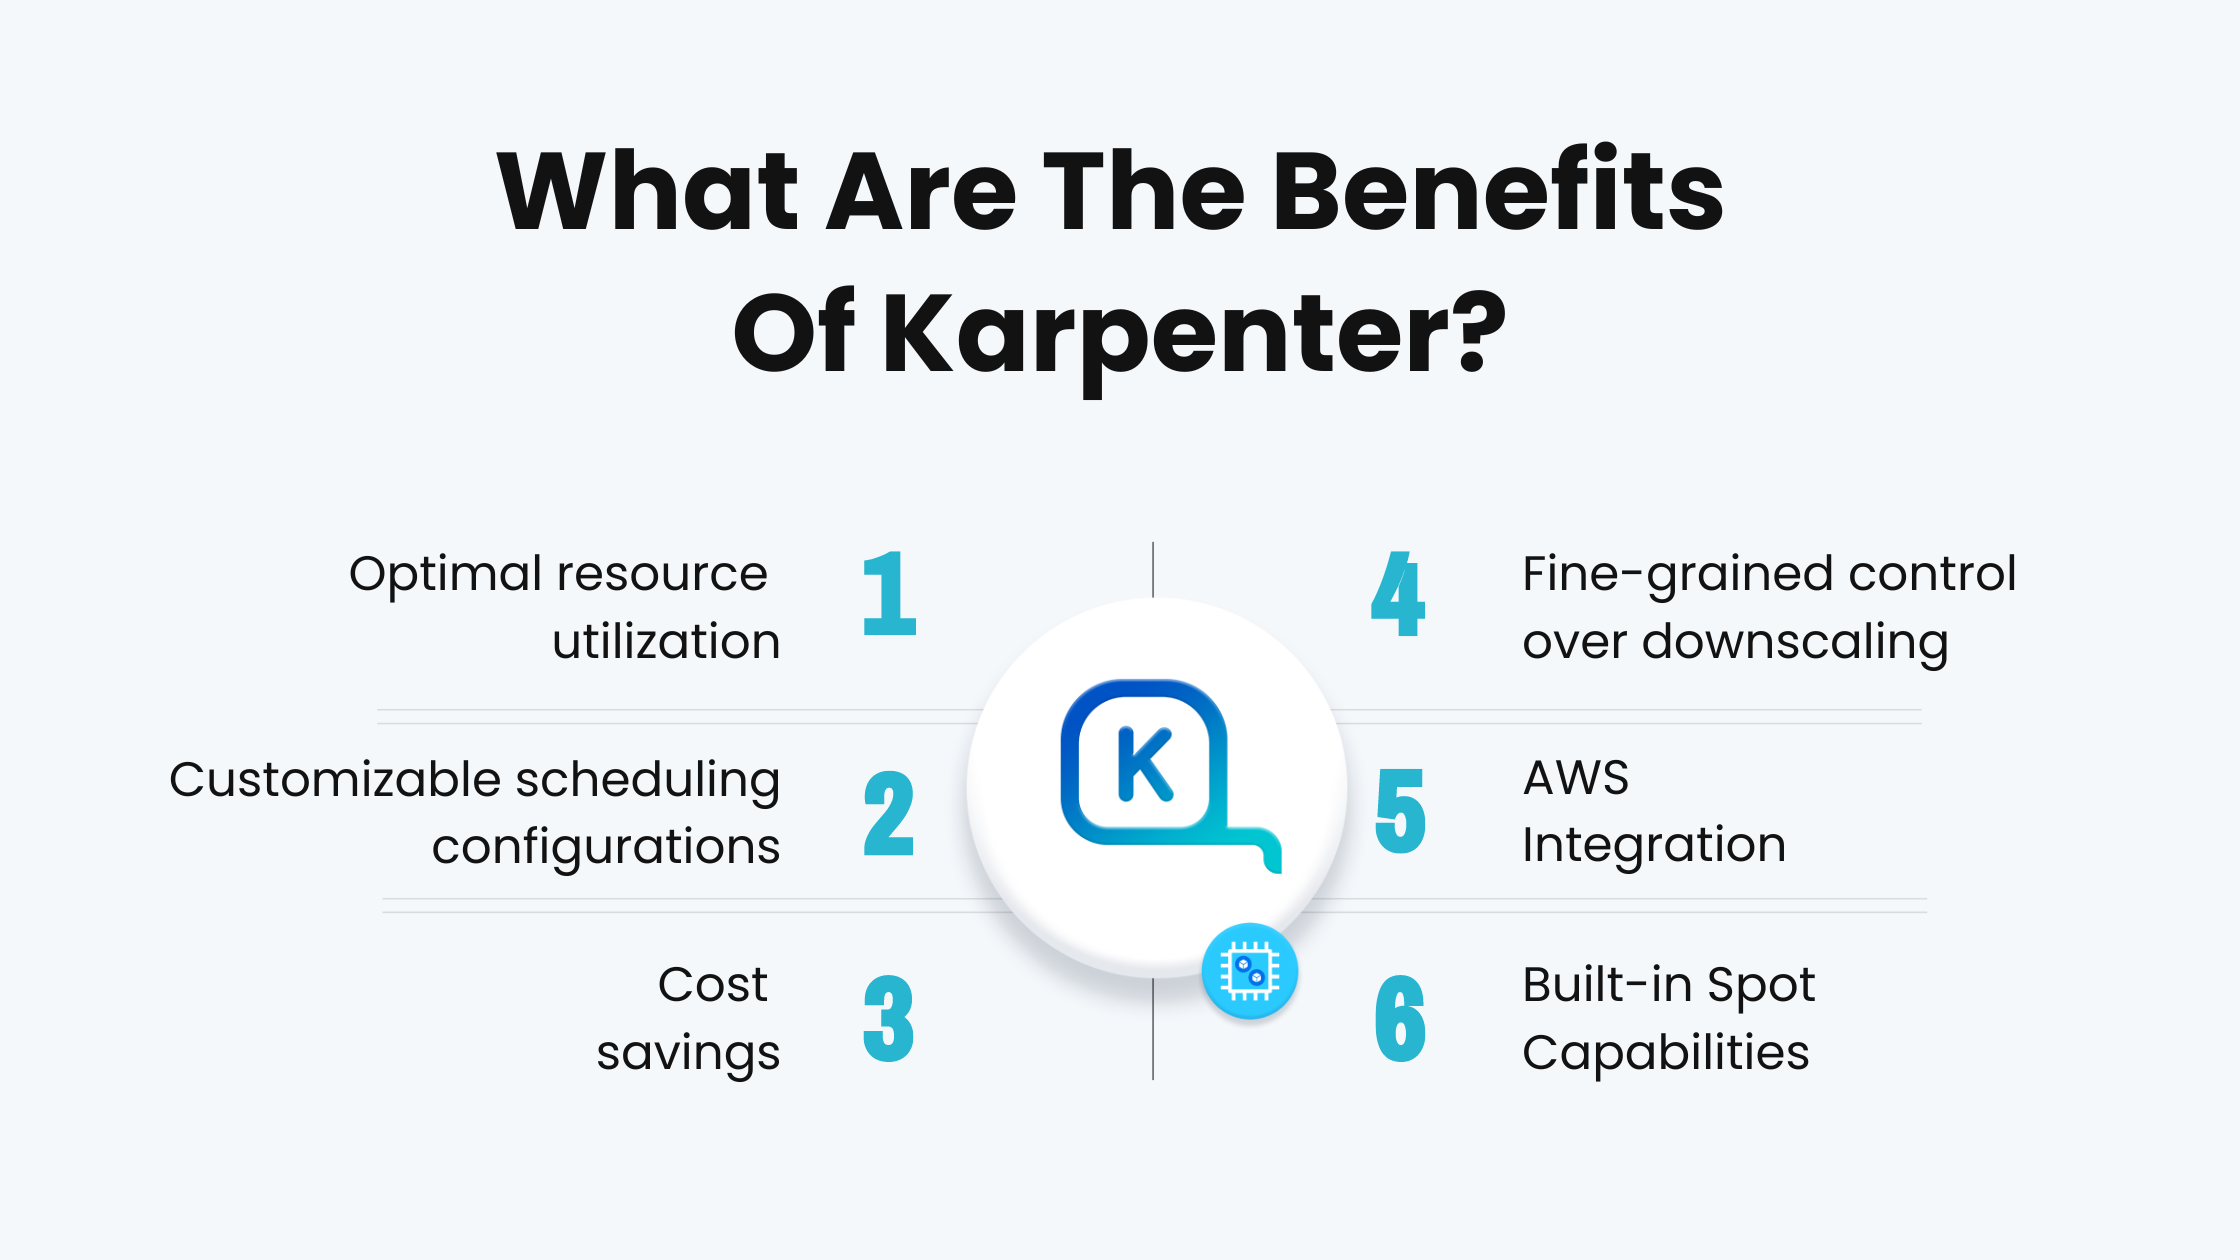 The benefits of Karpenter